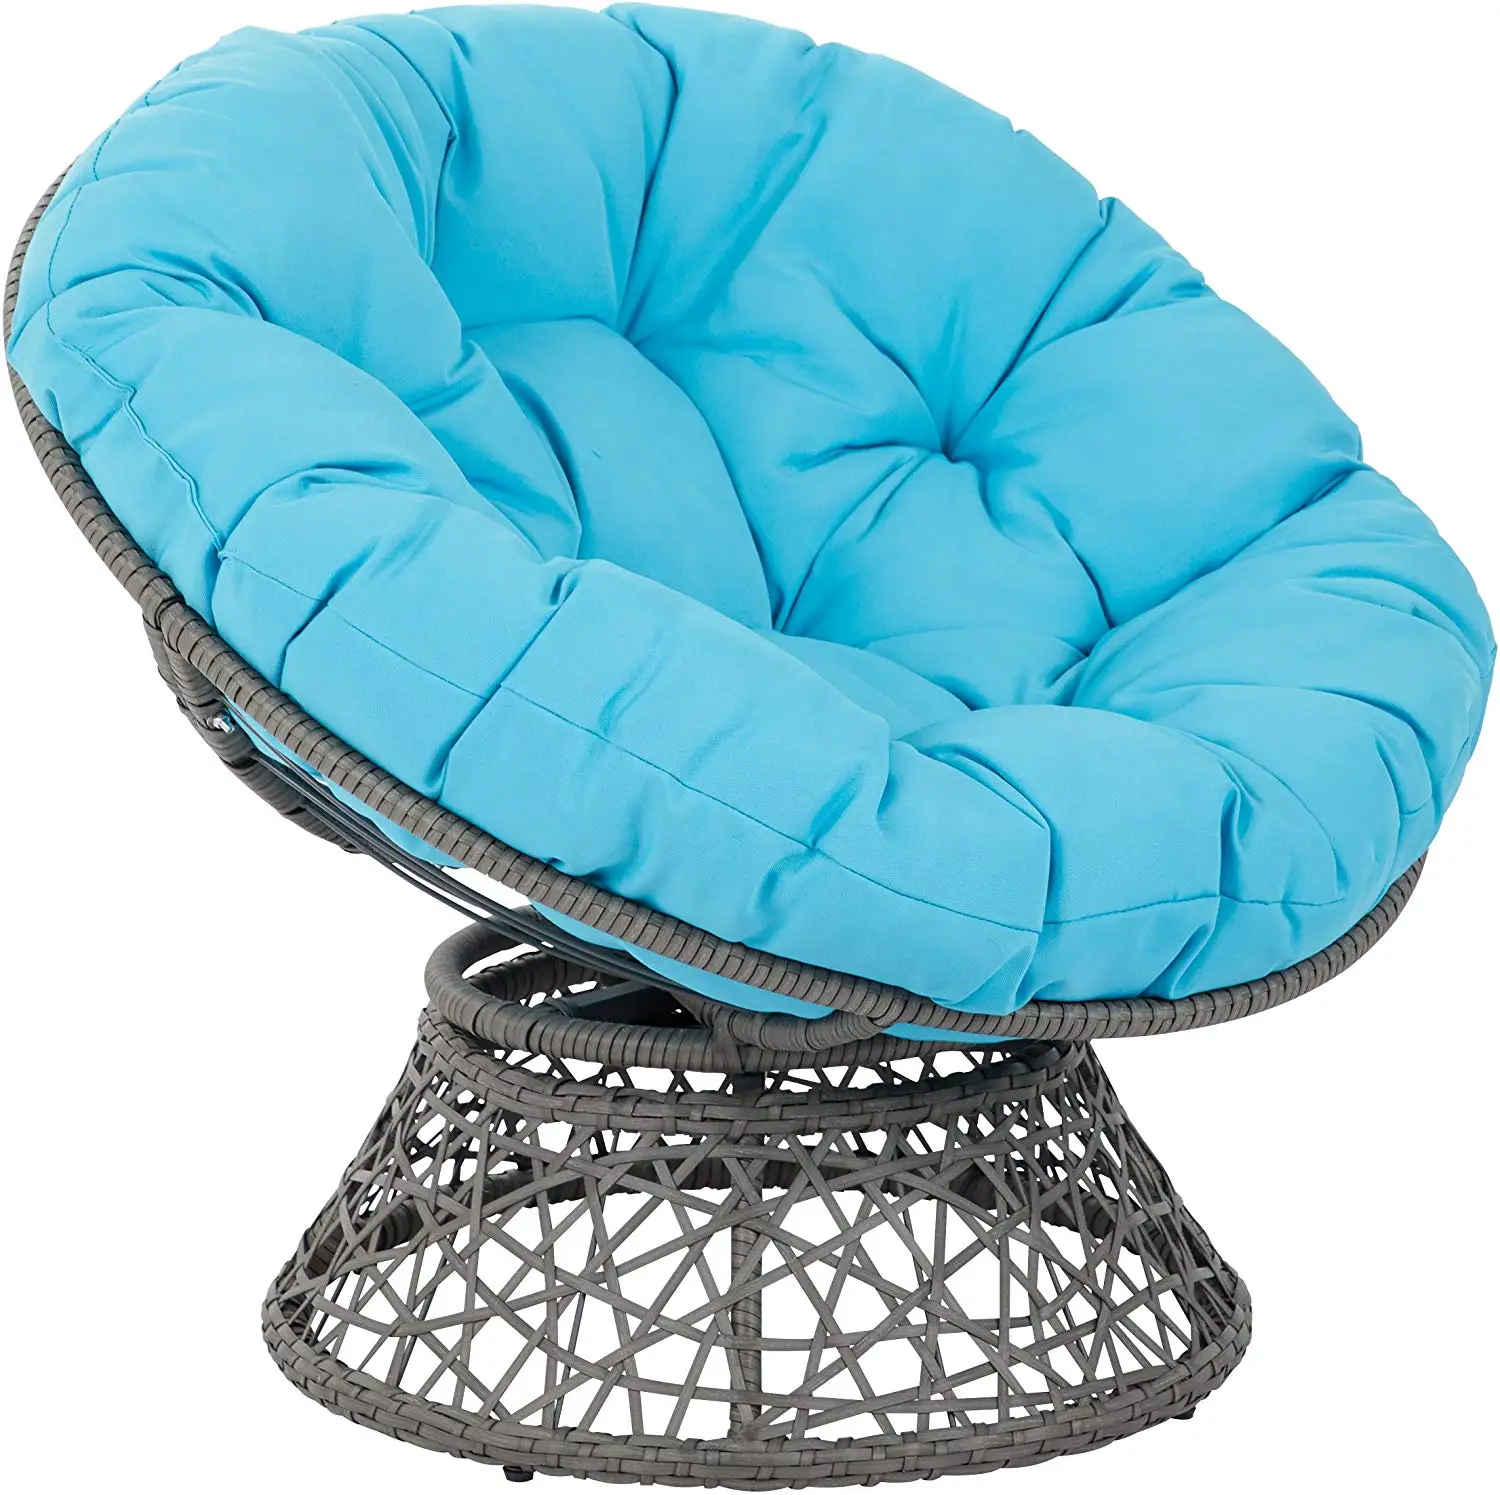 Indoor Outdoor Papasan Chair Cushion Covers Buy Papasan